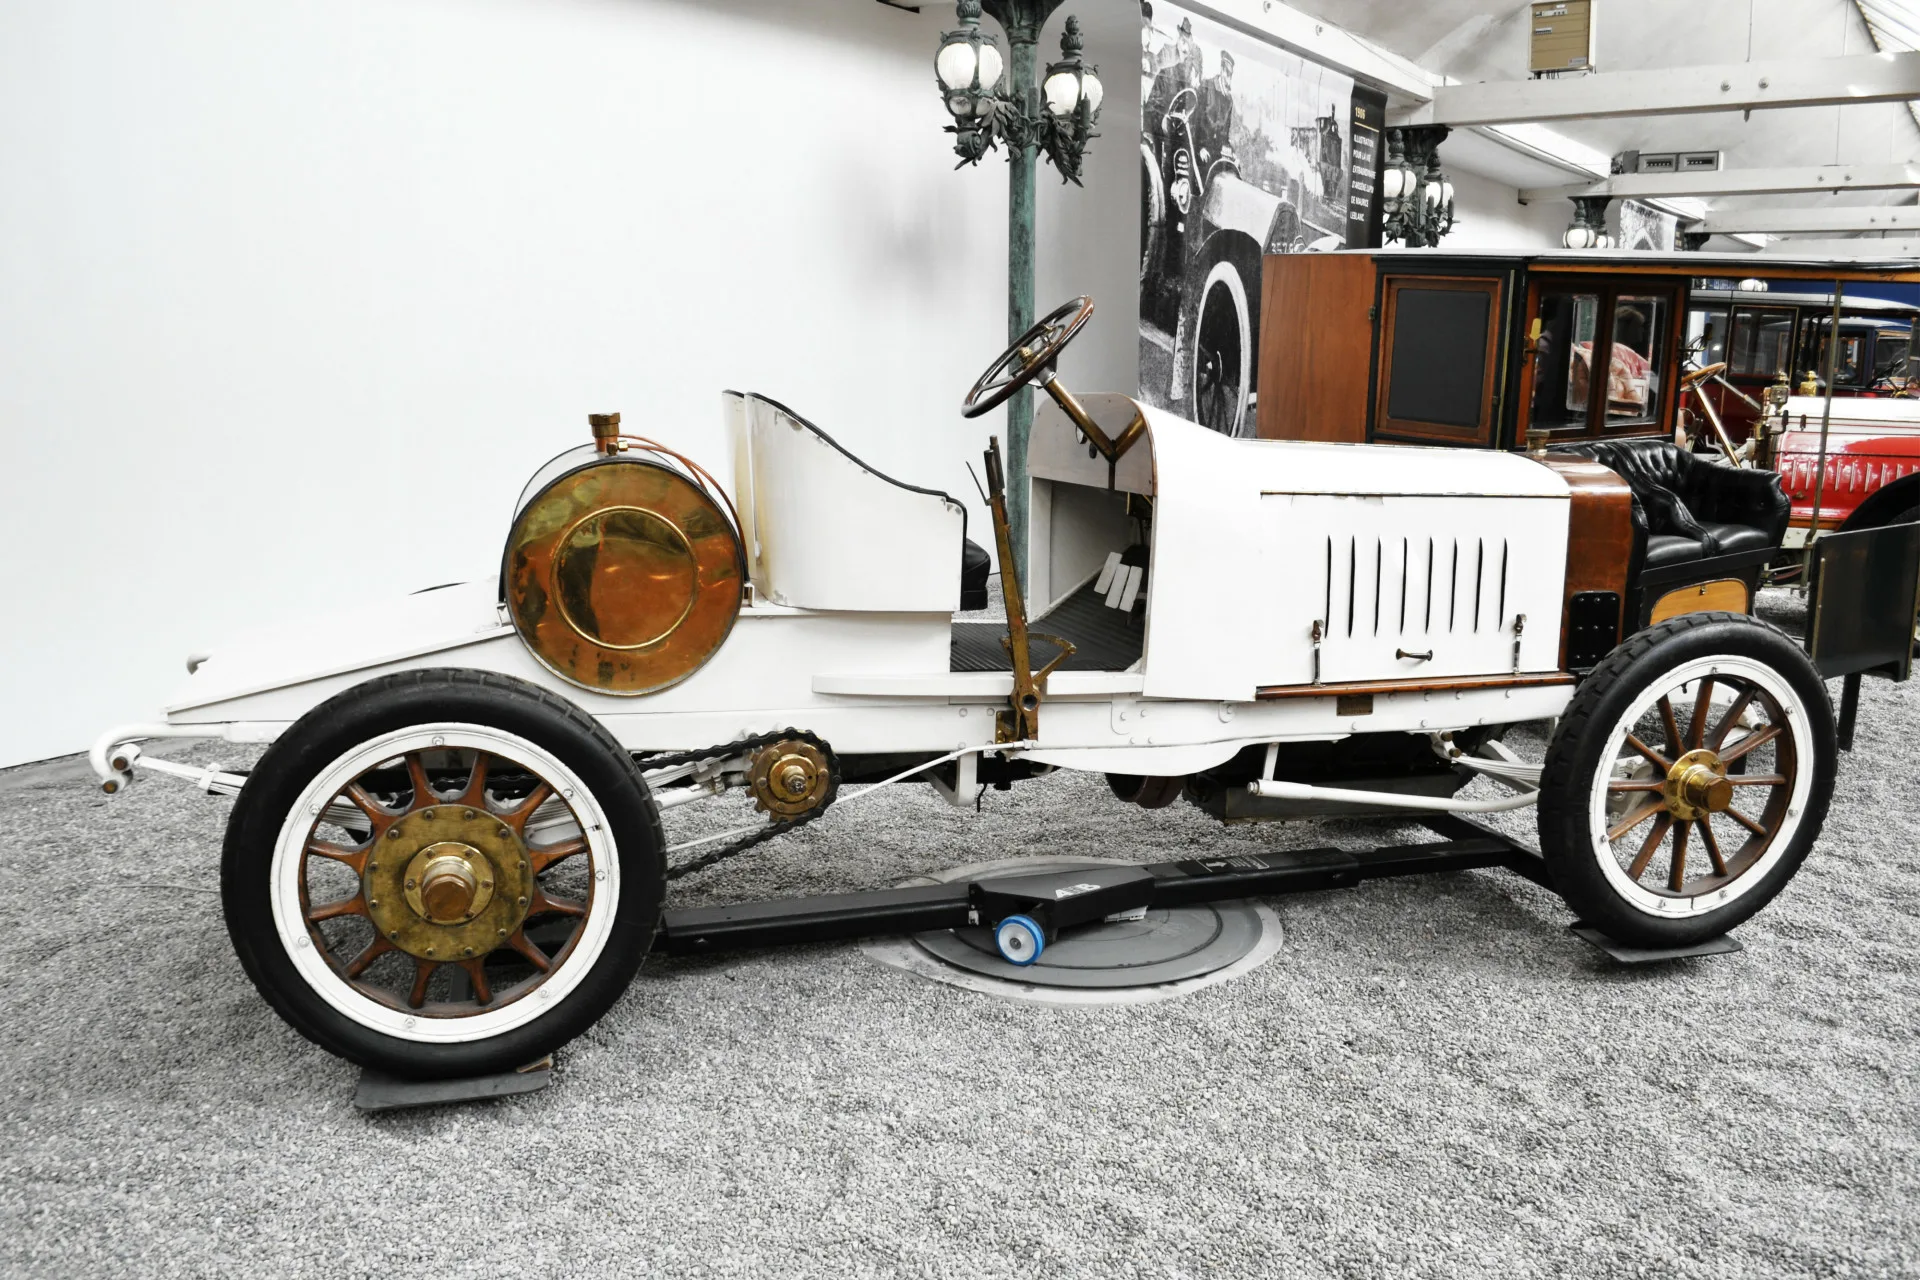 Cite de l’ Automobile, Μουσείο αυτοκινήτου στην Αλσατία 137